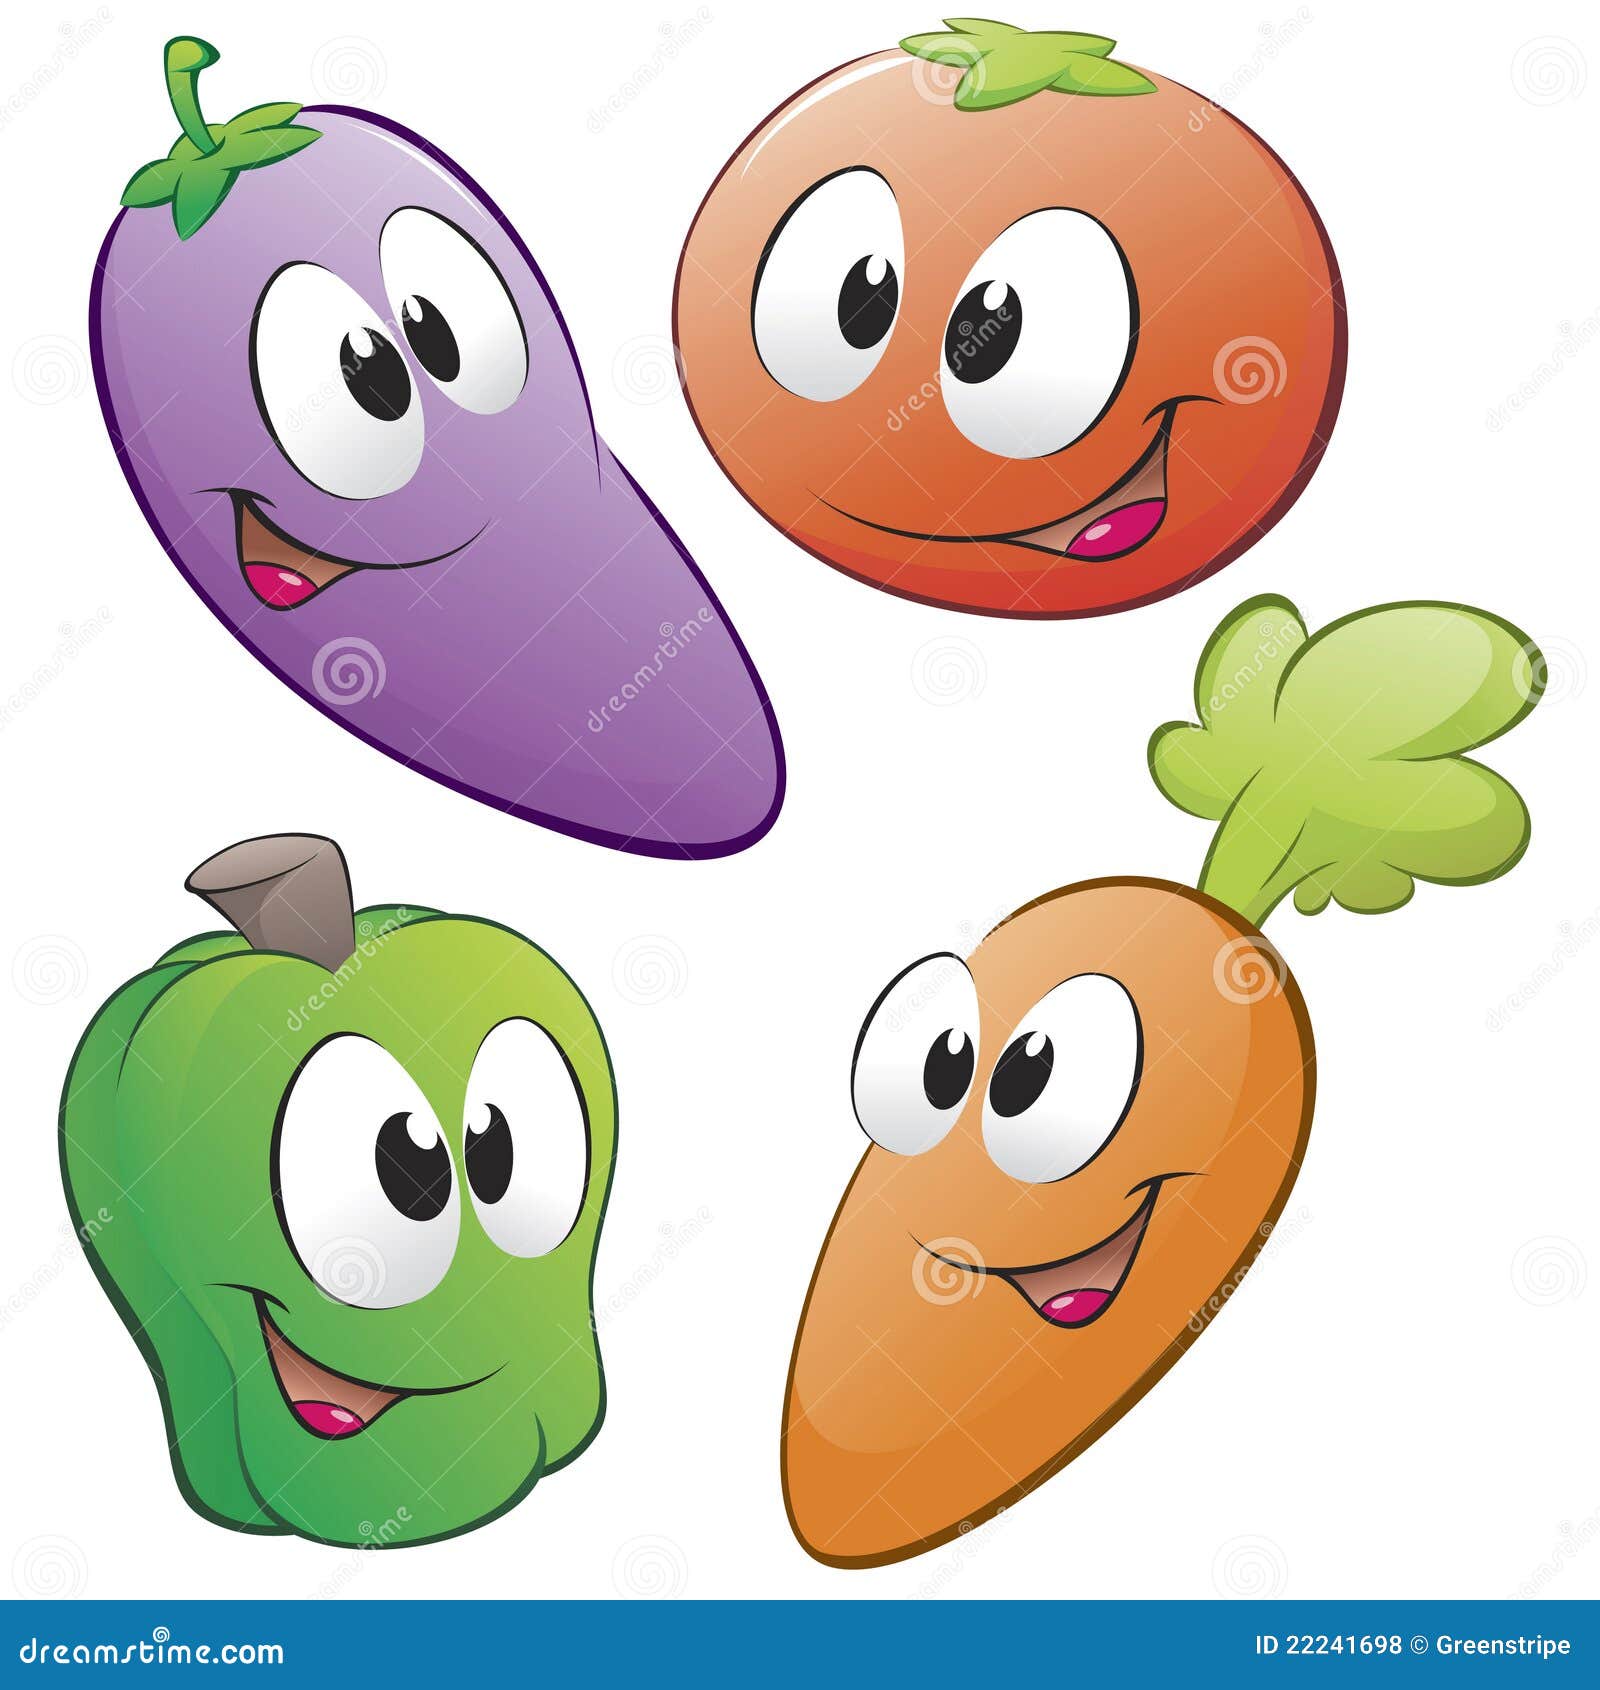 cartoon clipart of vegetables - photo #38